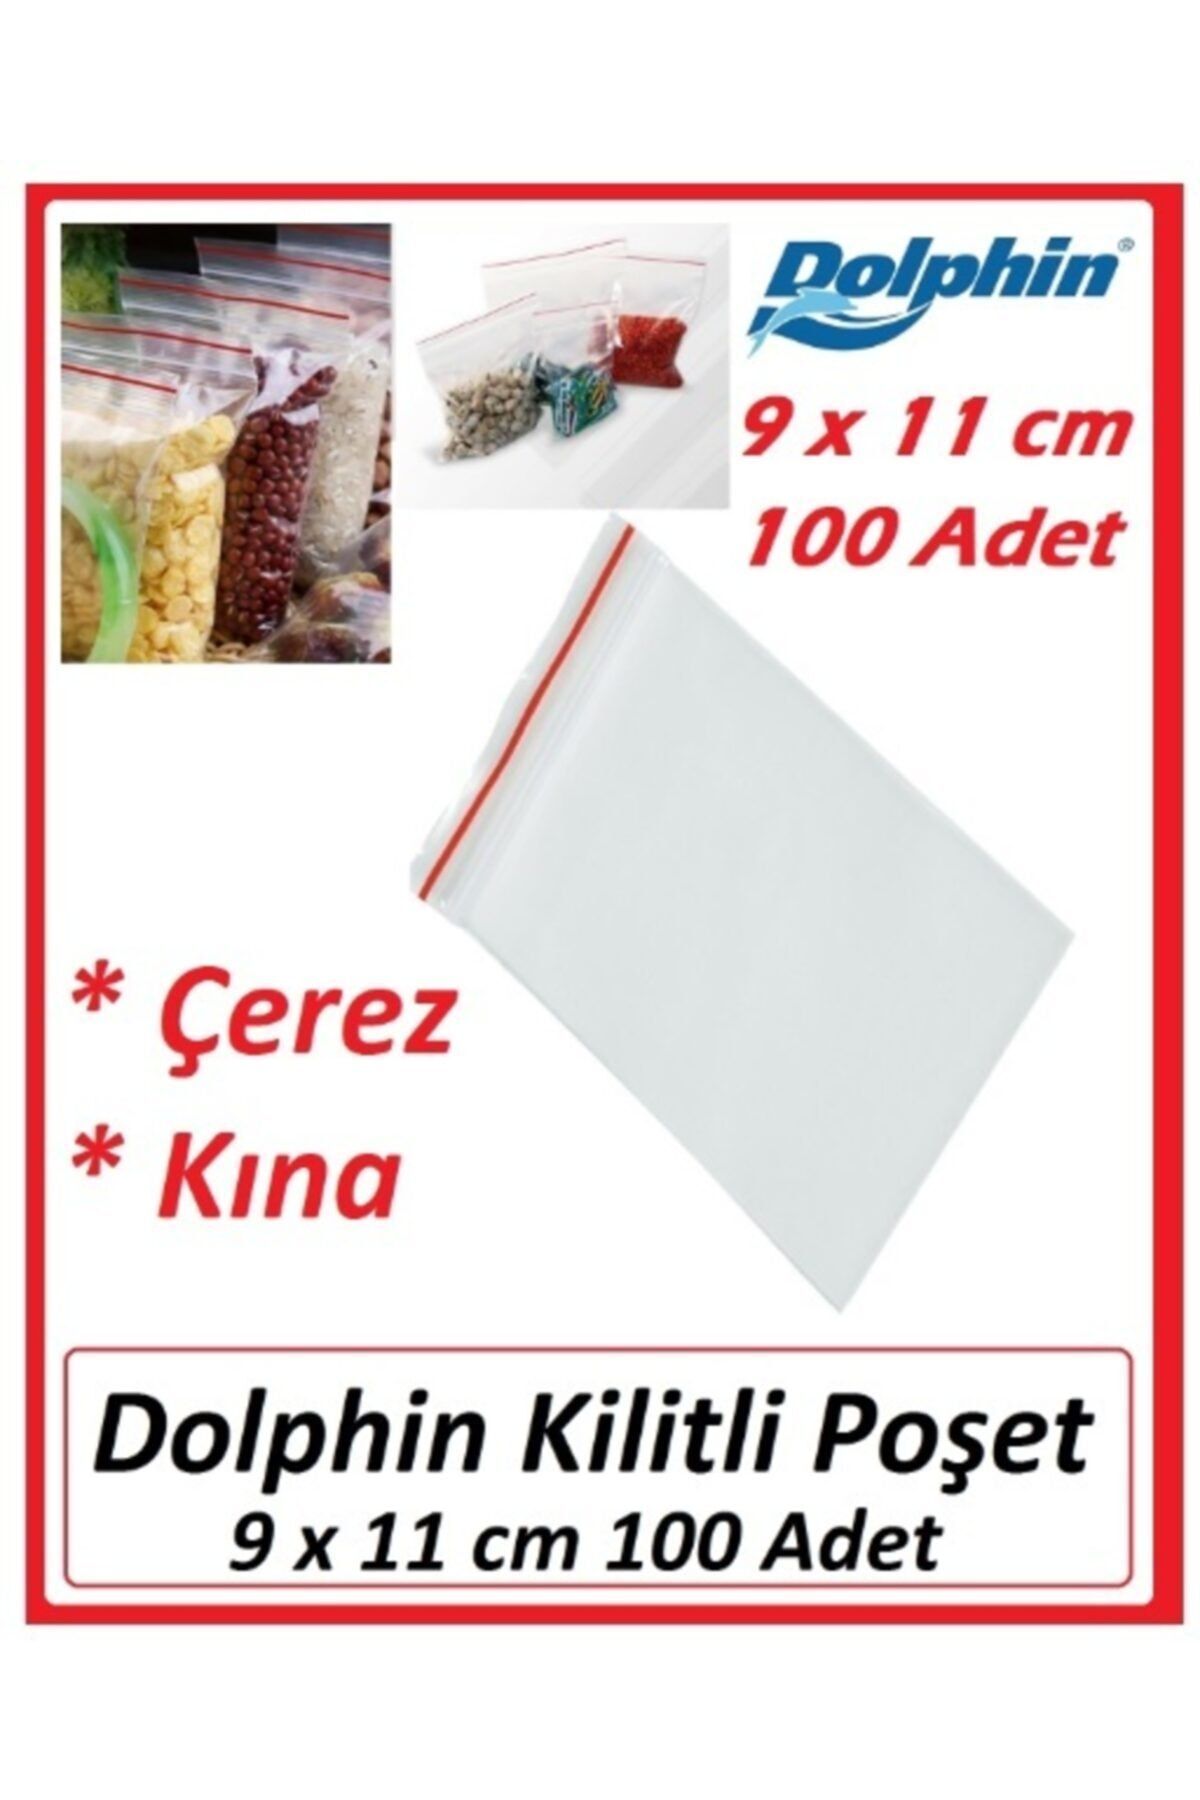 Dolphin Kilitli Poşet 9 X 11 cm 100 Adet